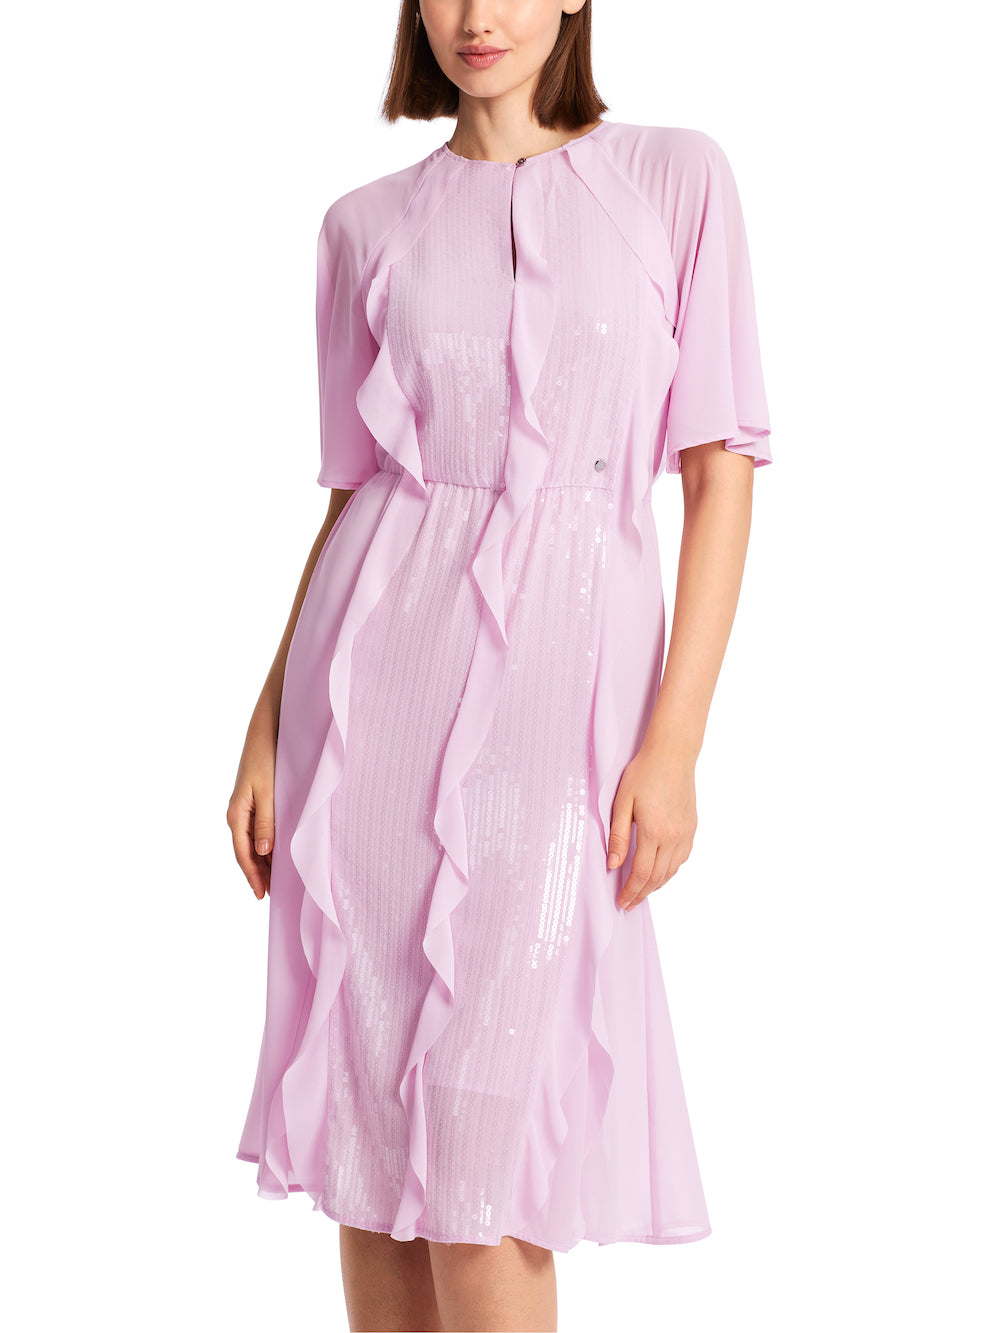 Pink Lavender Sequin Frill Dress